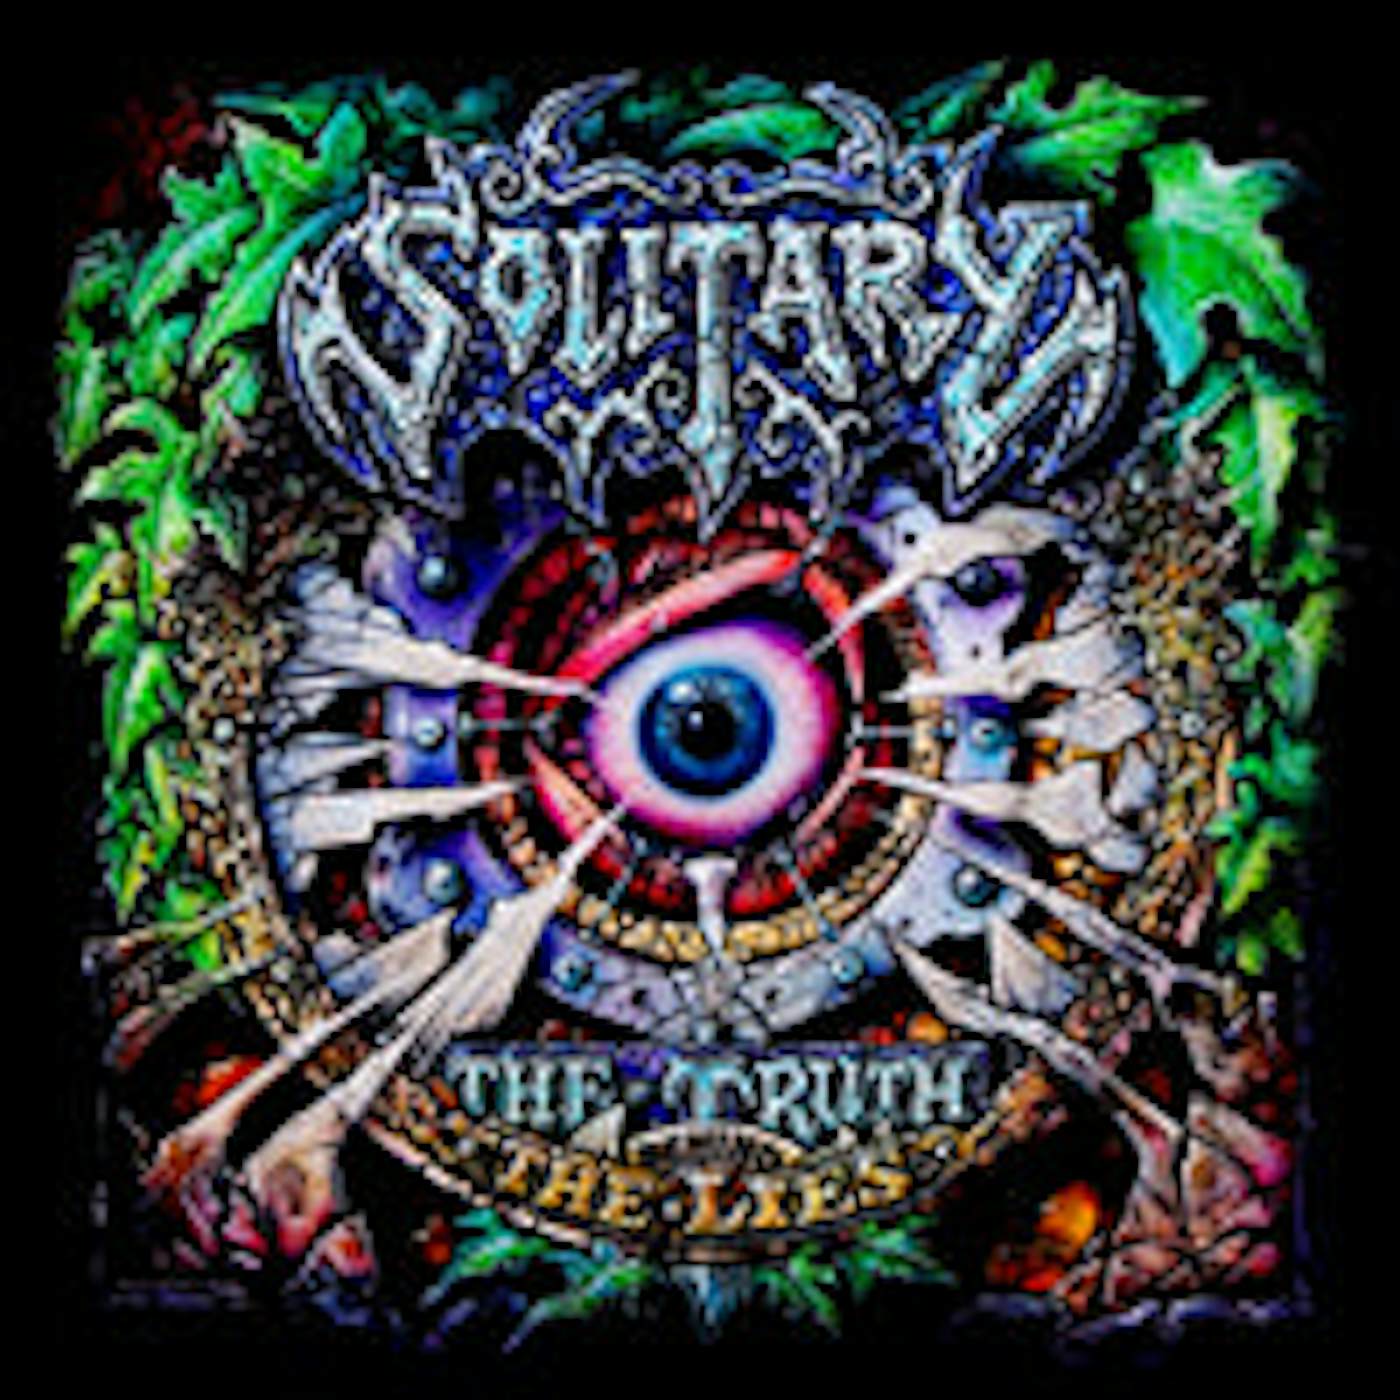 Solitary LP - The Truth Behind The Lies (Ltd Coloured Vinyl)